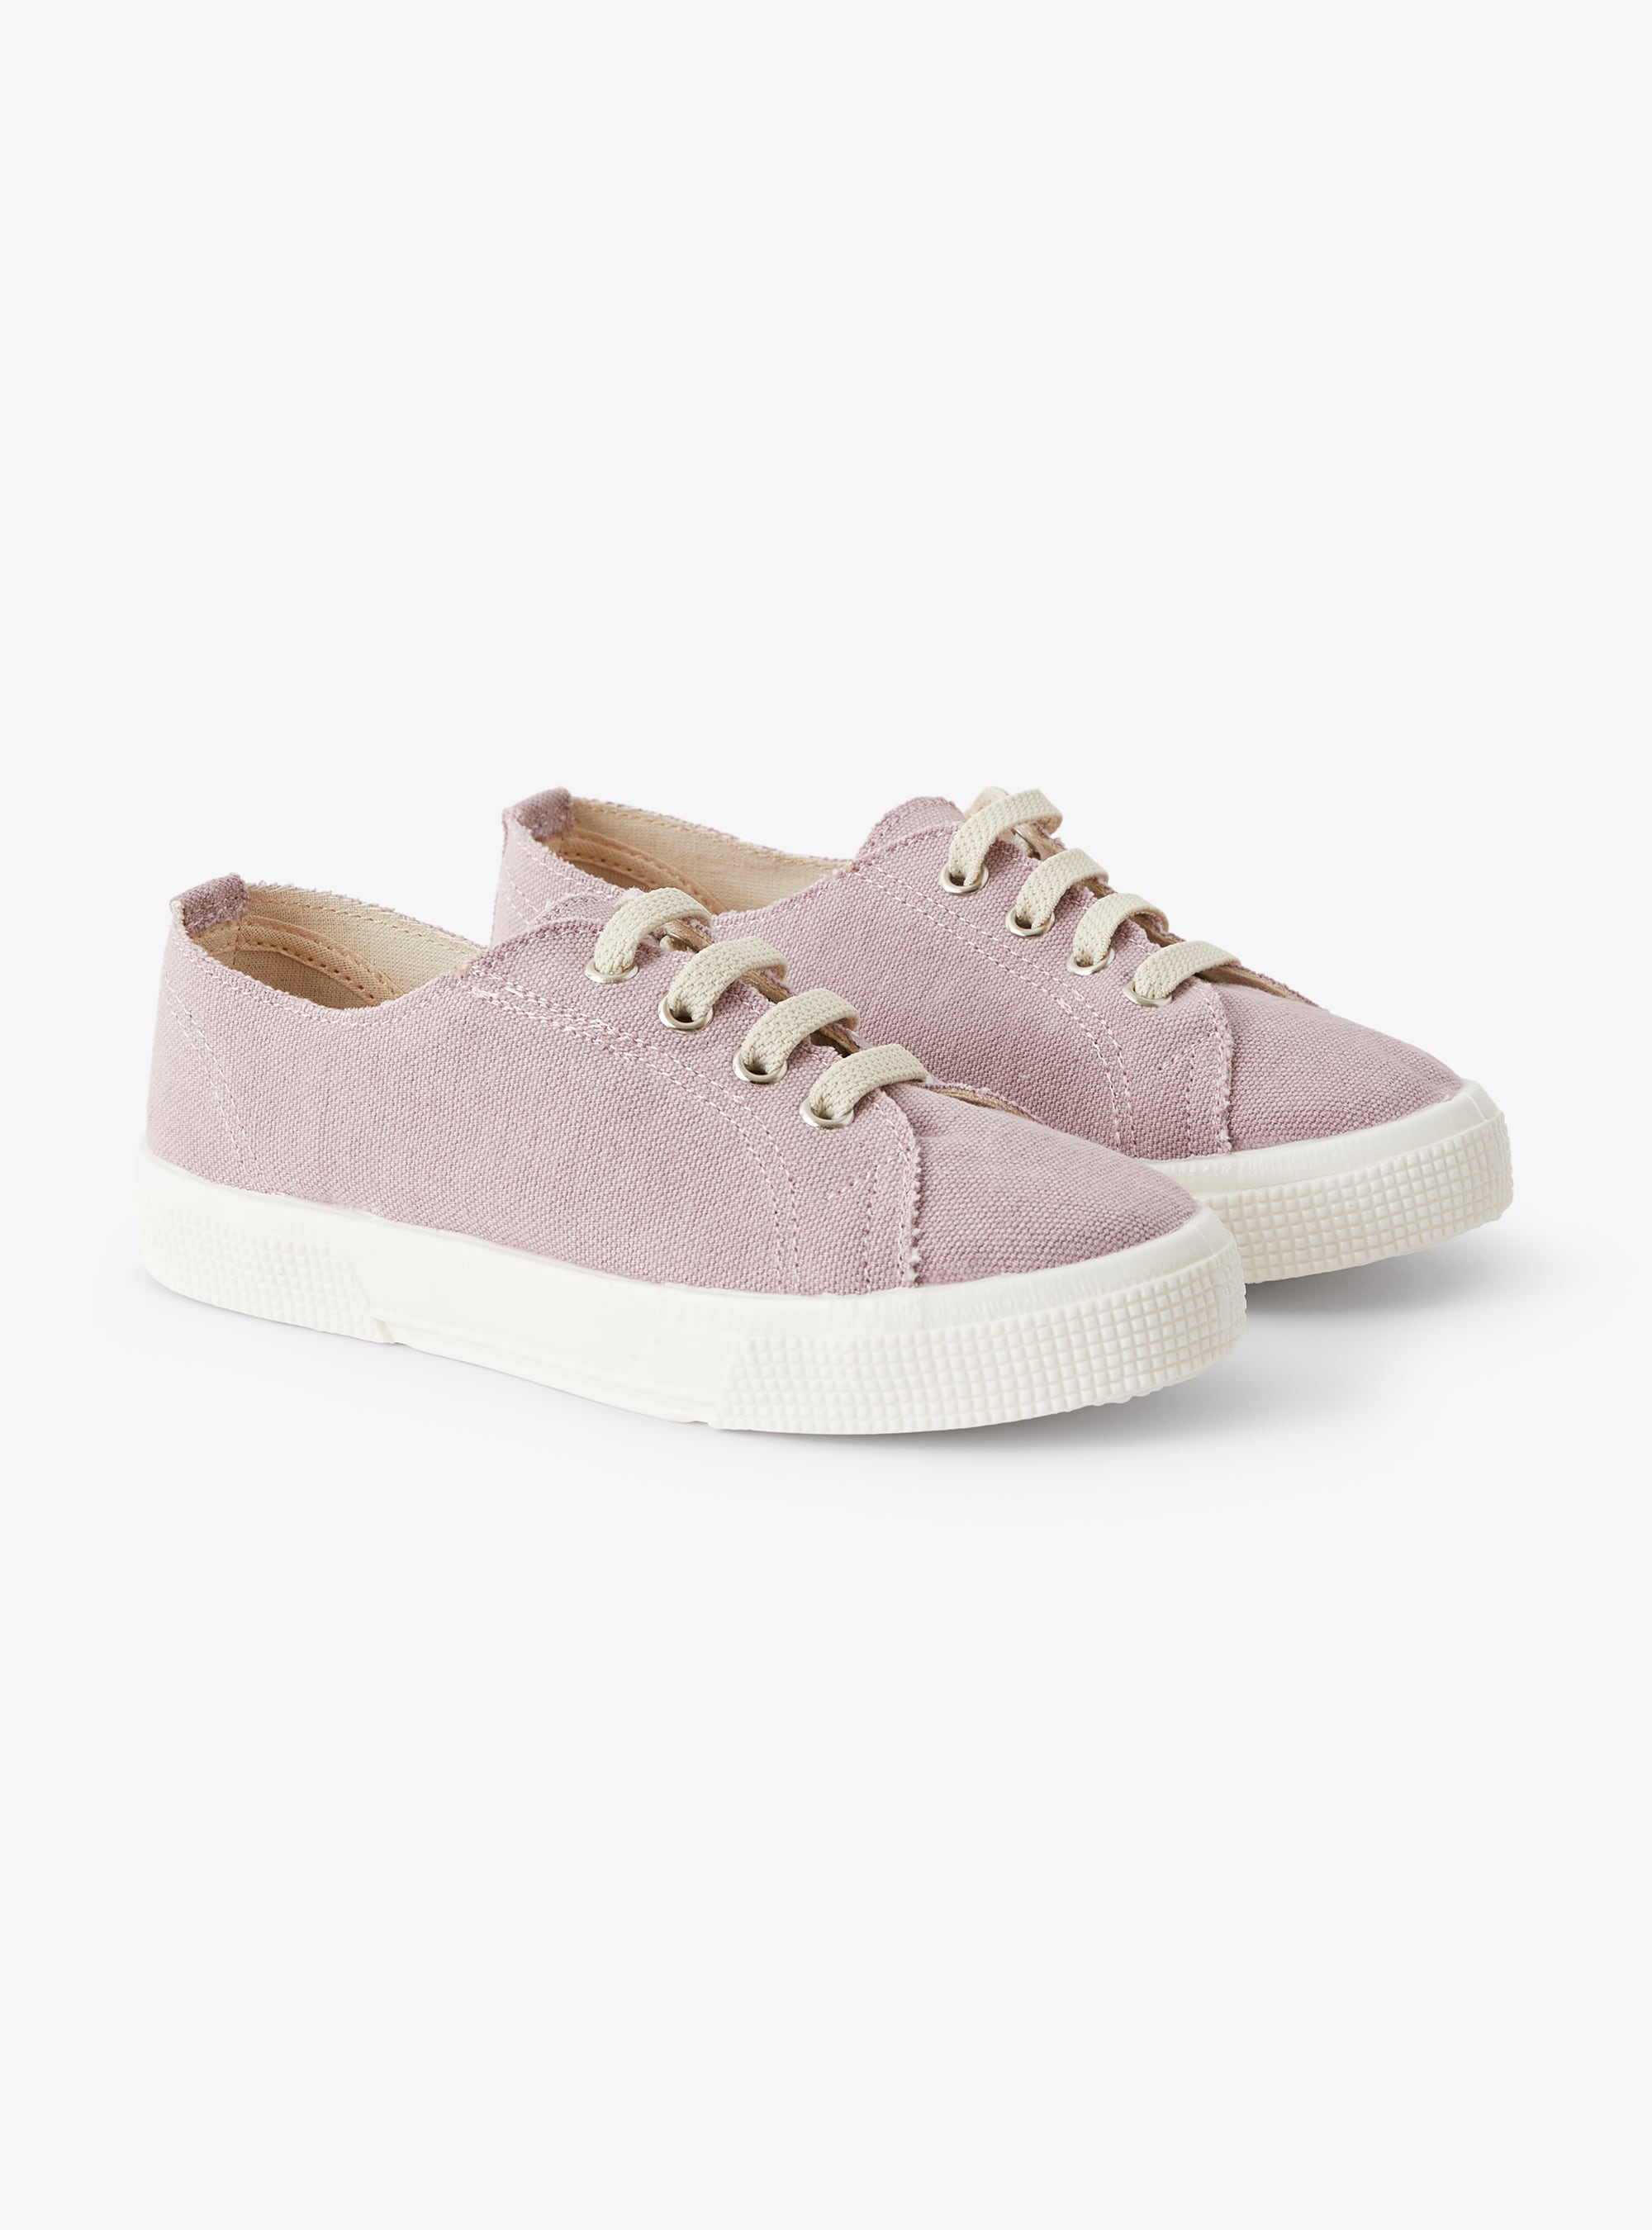 Sneakers aus lila Segeltuch mit Senkeln - Rose | Il Gufo